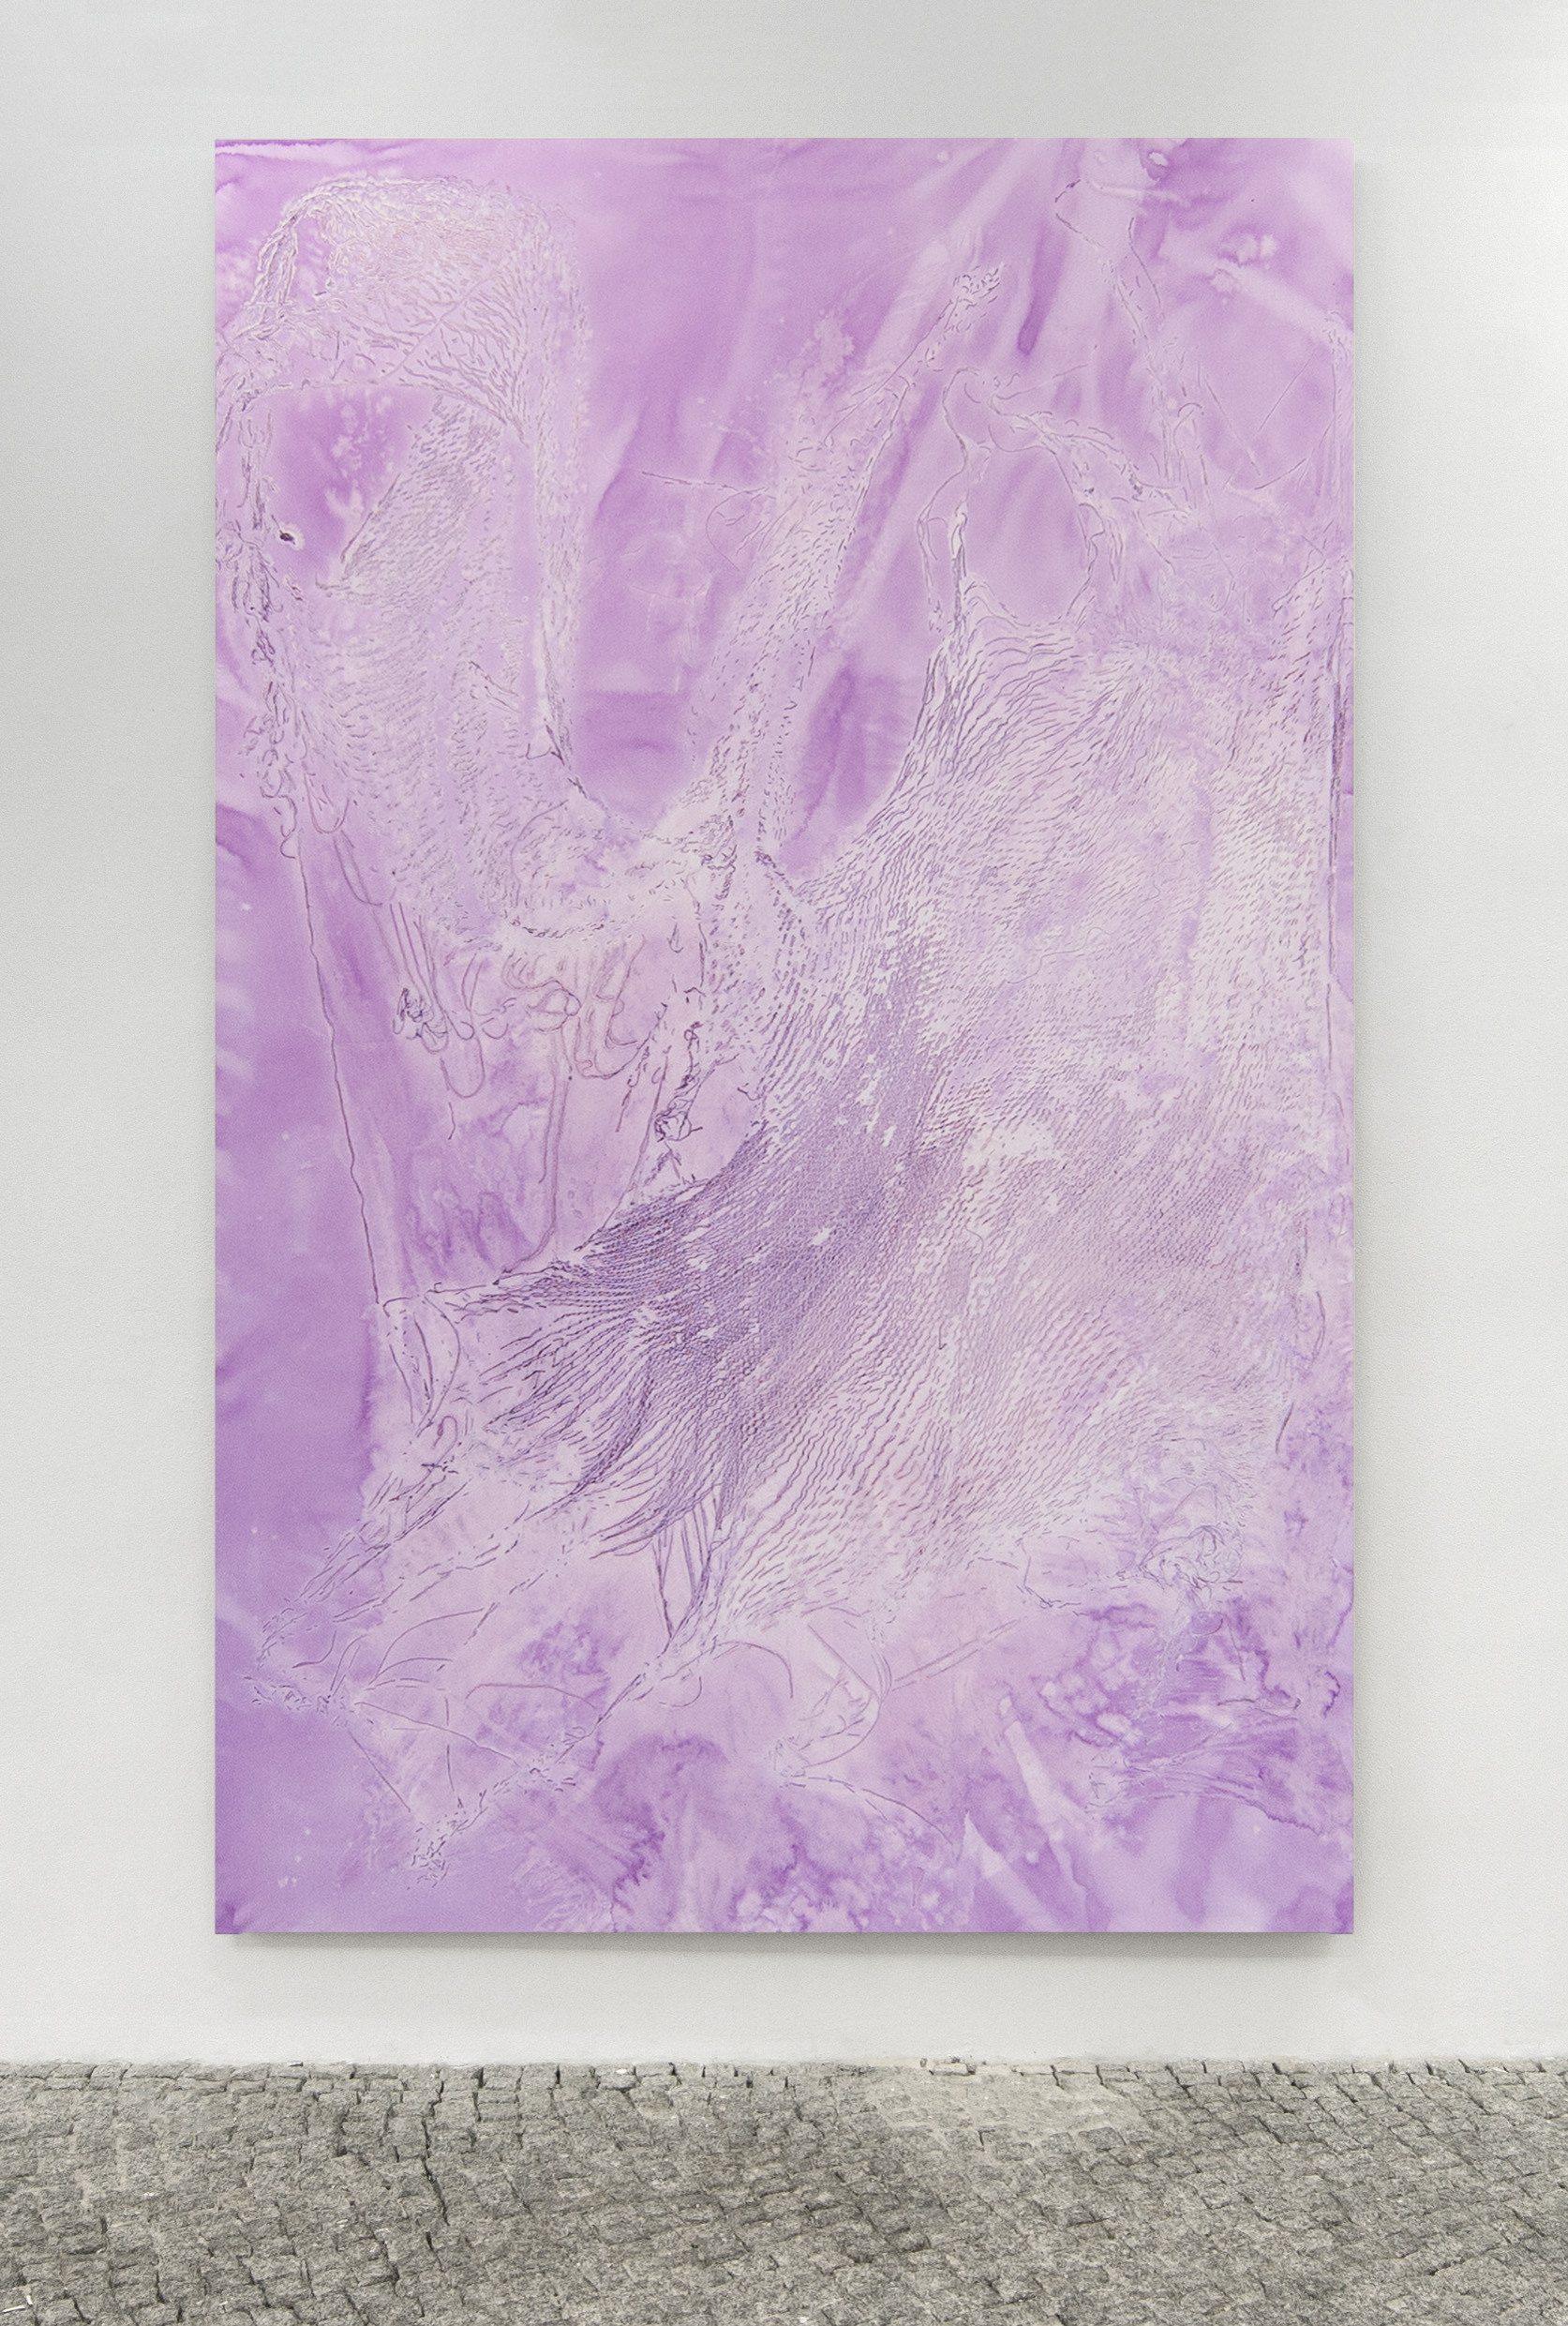 Alizée Gazeau, H_22_1, 2022, acrylic and ink on canvas, 300x190 cm